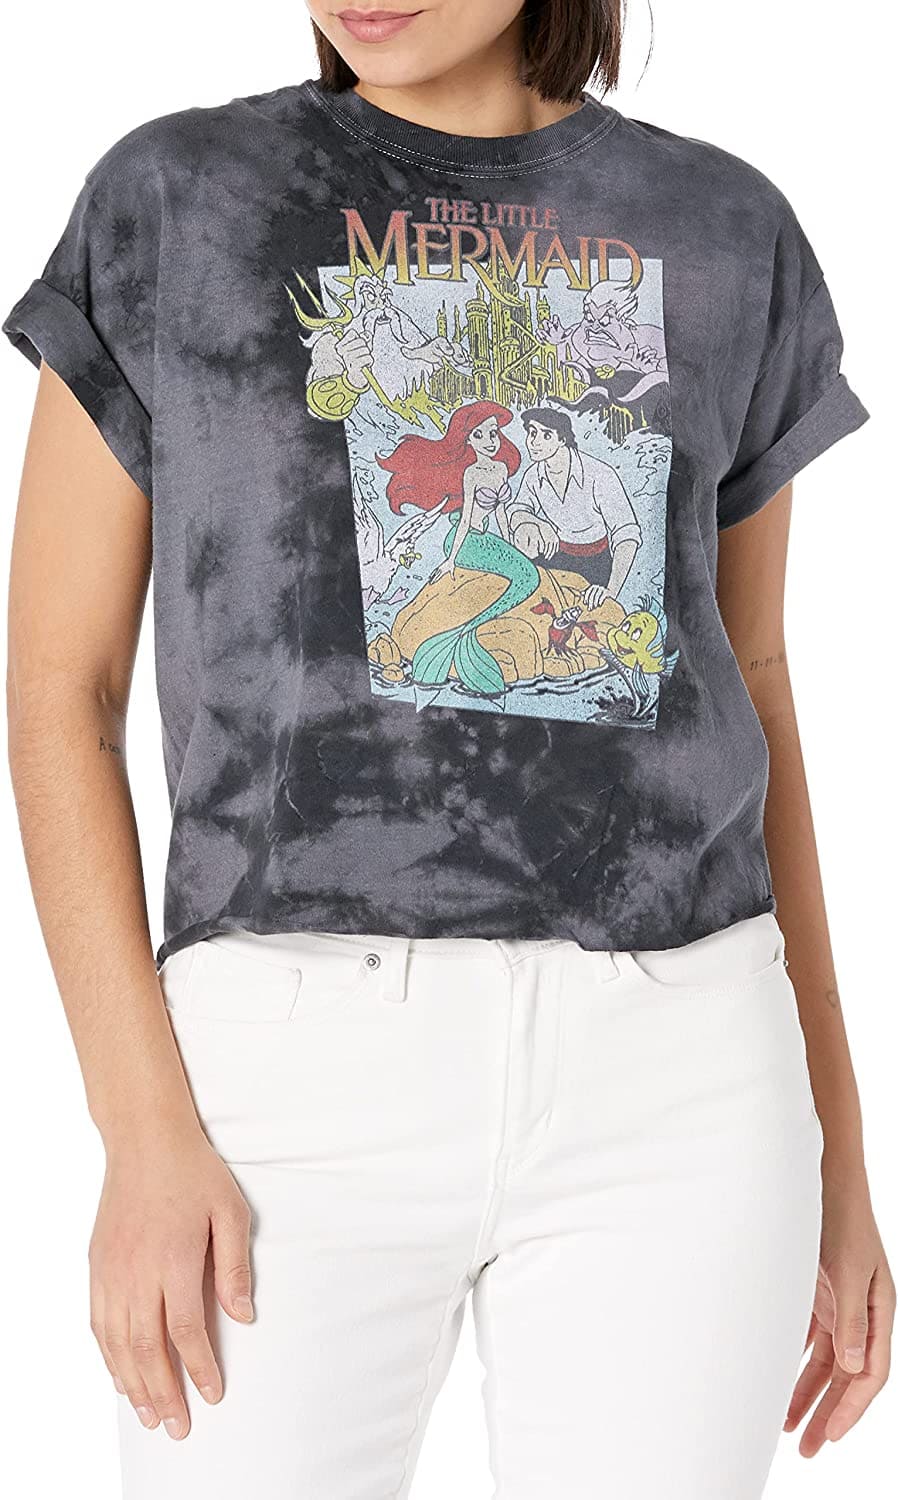 Disney Princess Mermaid Cover Short Sleeve T-Shirt